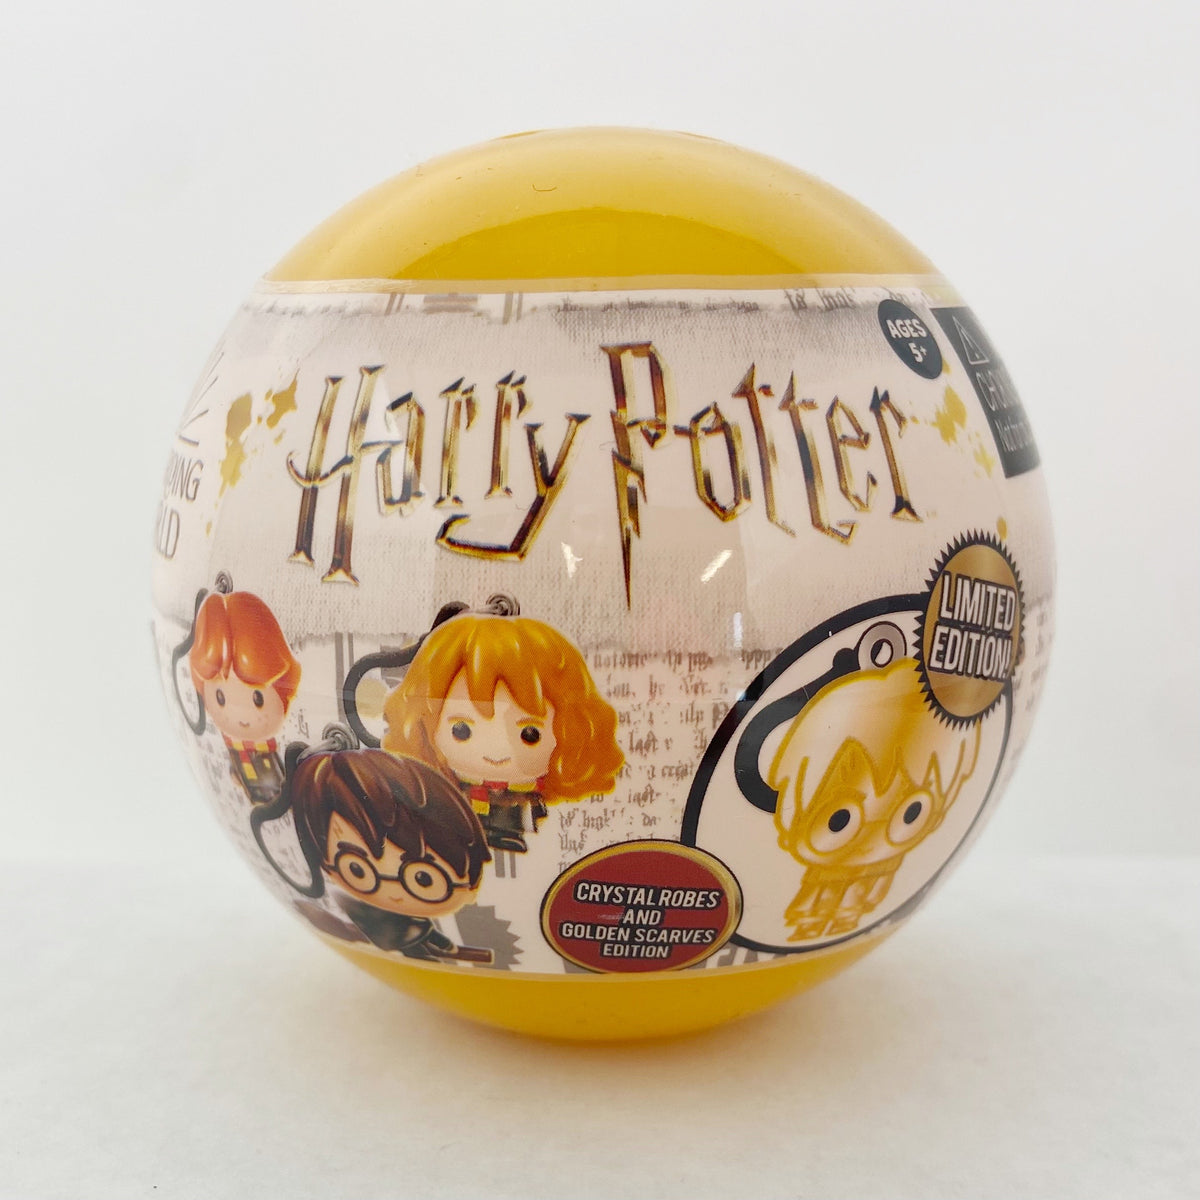 40*60cm Harri Potter Plush Carpet Harrie Potter Death Hallows Magic Hat  Golden Snitches Action Figure Foot Pad Rug Cotton Gifts - AliExpress